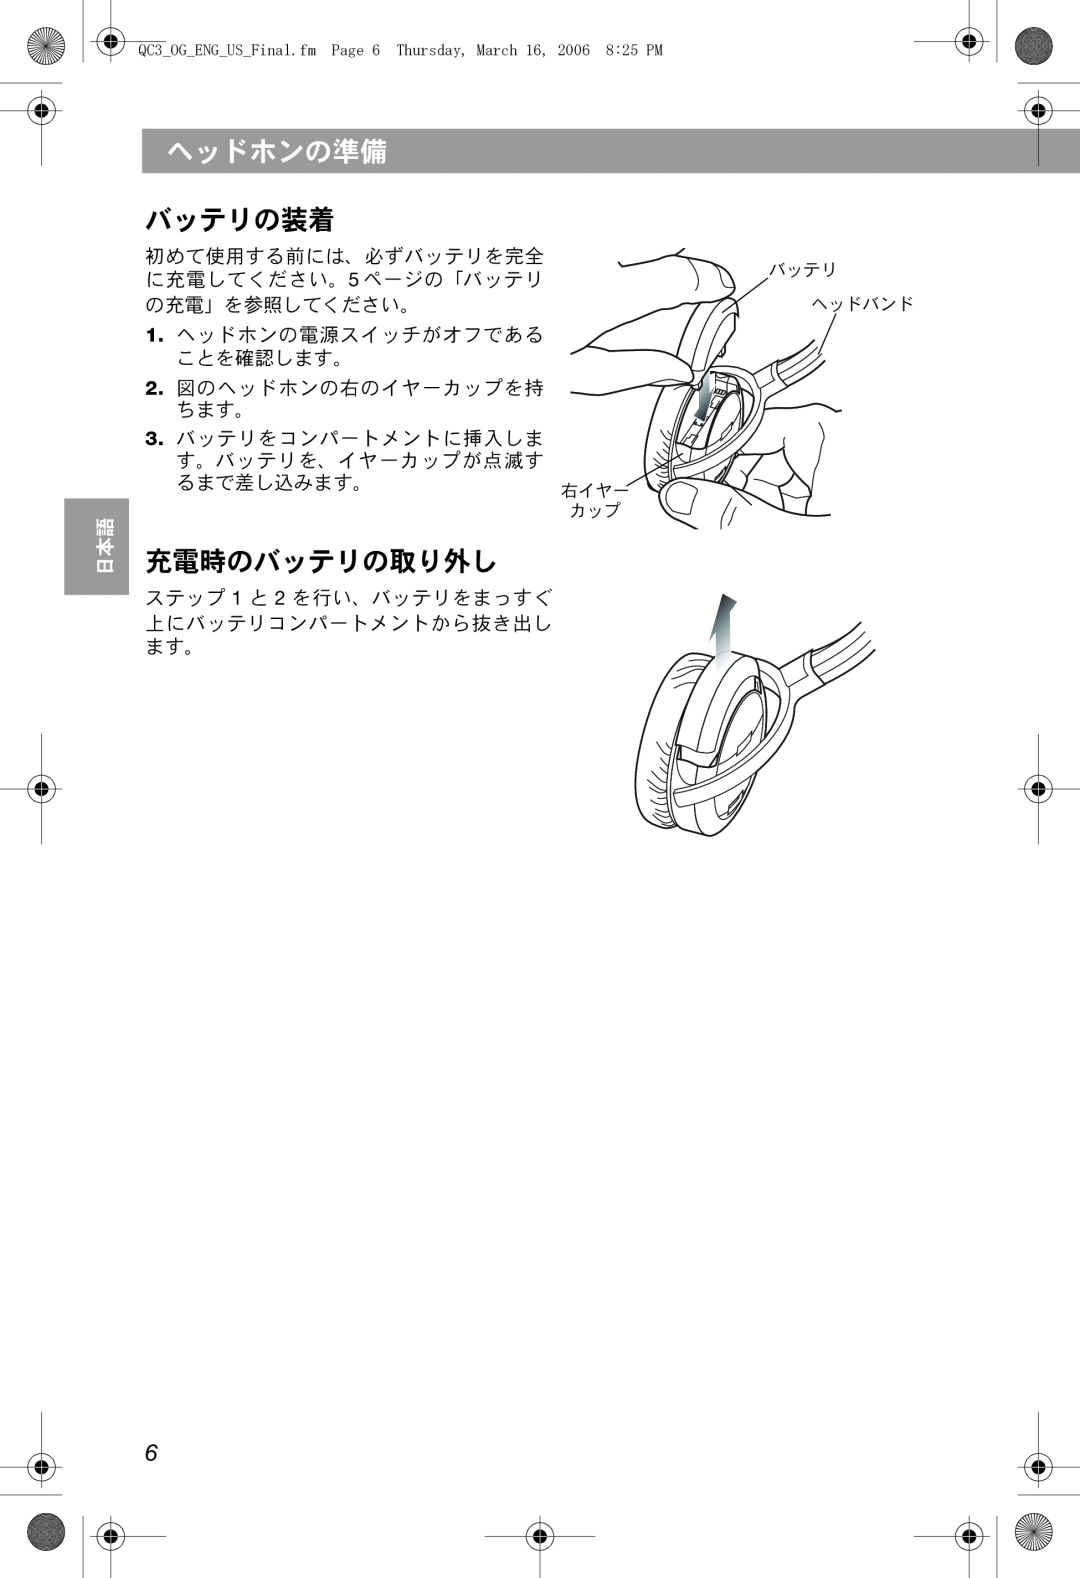 Bose QuietComfort 3 manual バッテリの装着, 充電時のバッテリの取り外し, ヘッドホンの準備, Thai, Korean, S. Chinese, Arabic, Tr. Chinese 